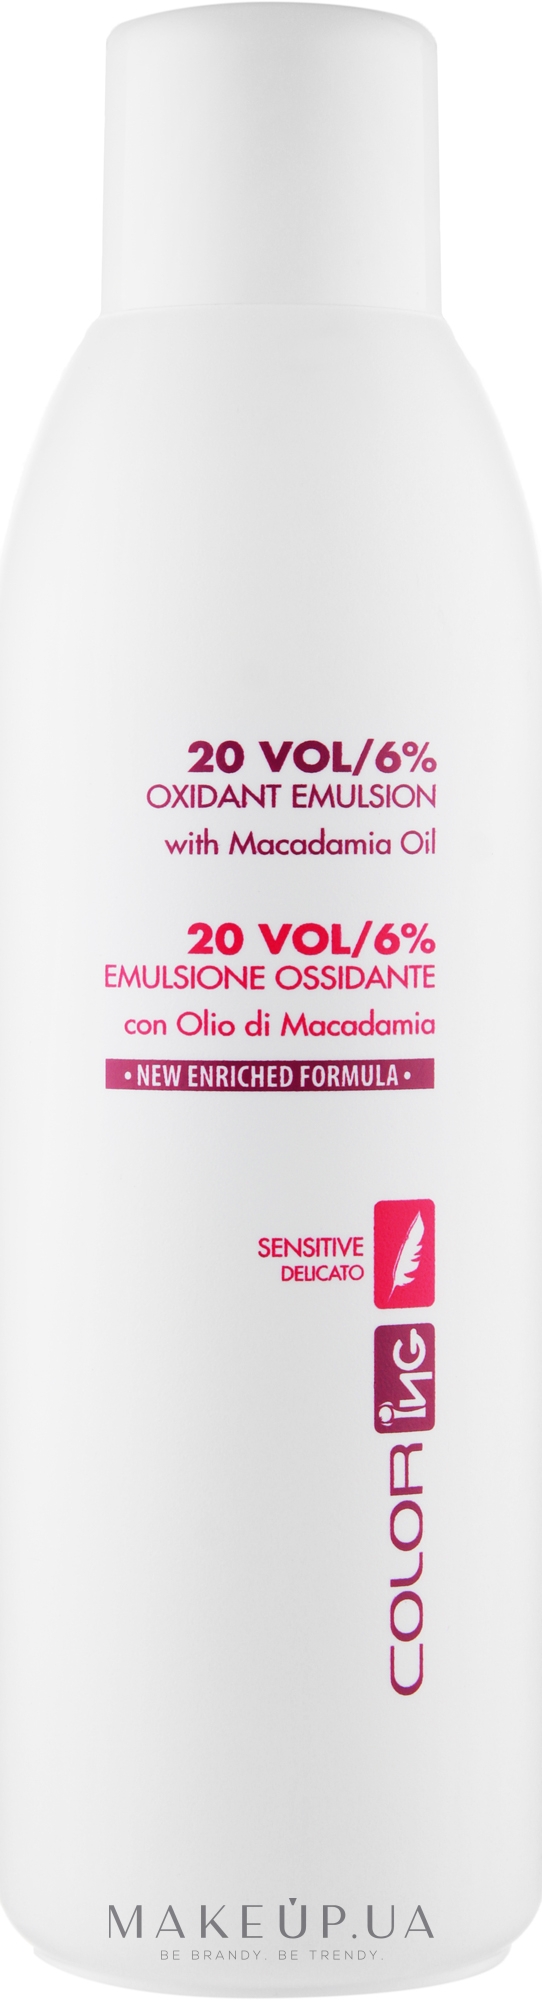 Окислювальна емульсія 6% - ING Professional Color-ING Macadamia Oil Oxidante Emulsion — фото 1000ml